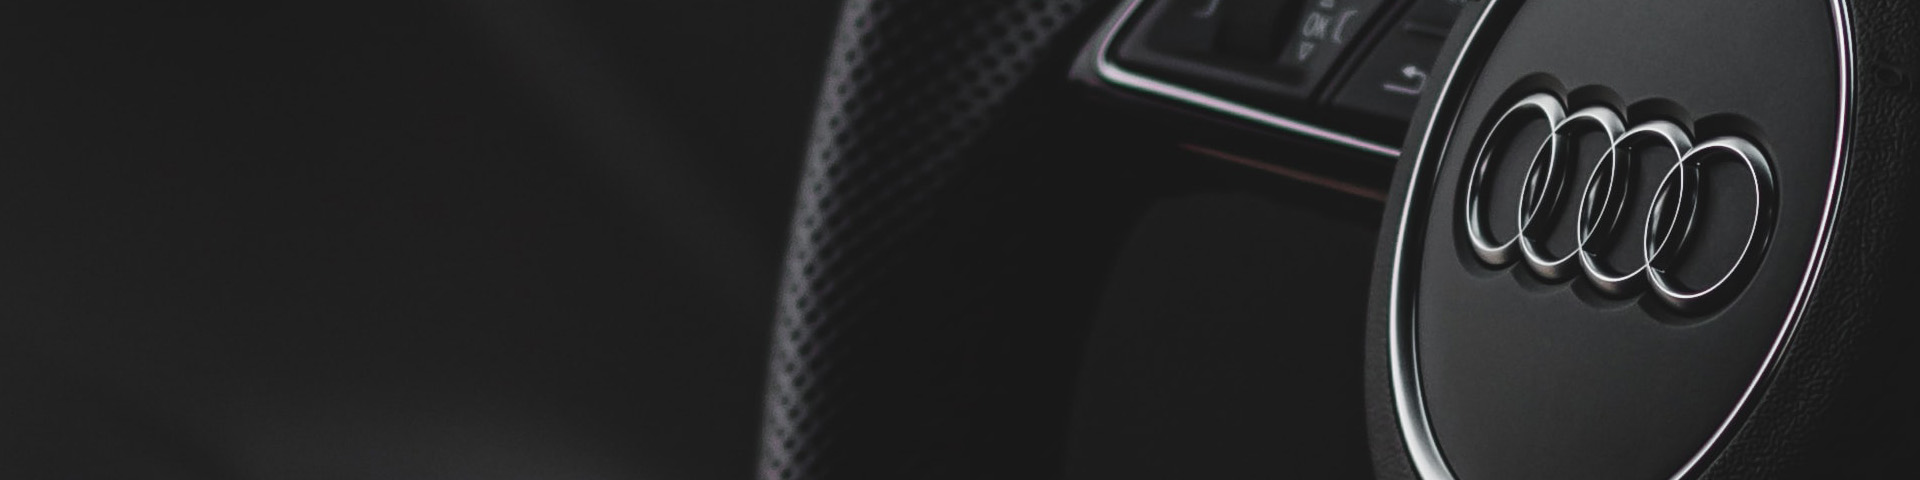 Audi RS4 Backdrop